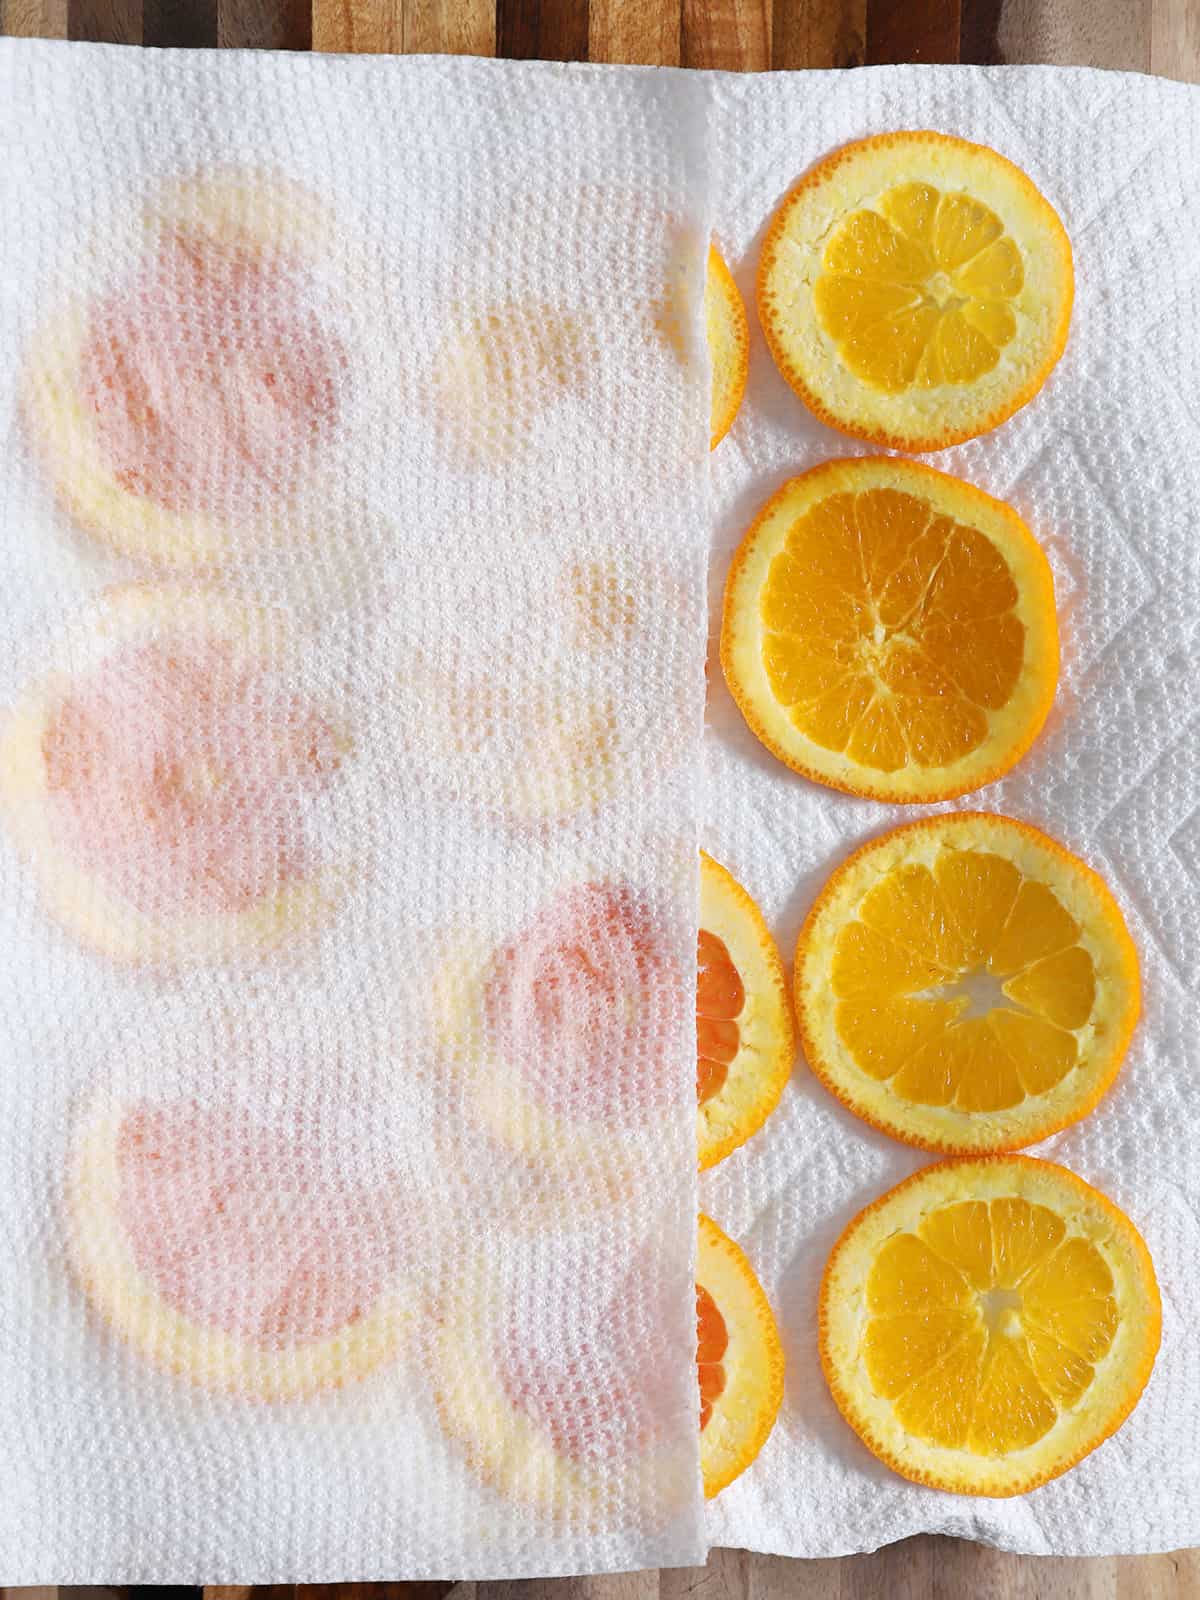 Paper towel on orange slices.